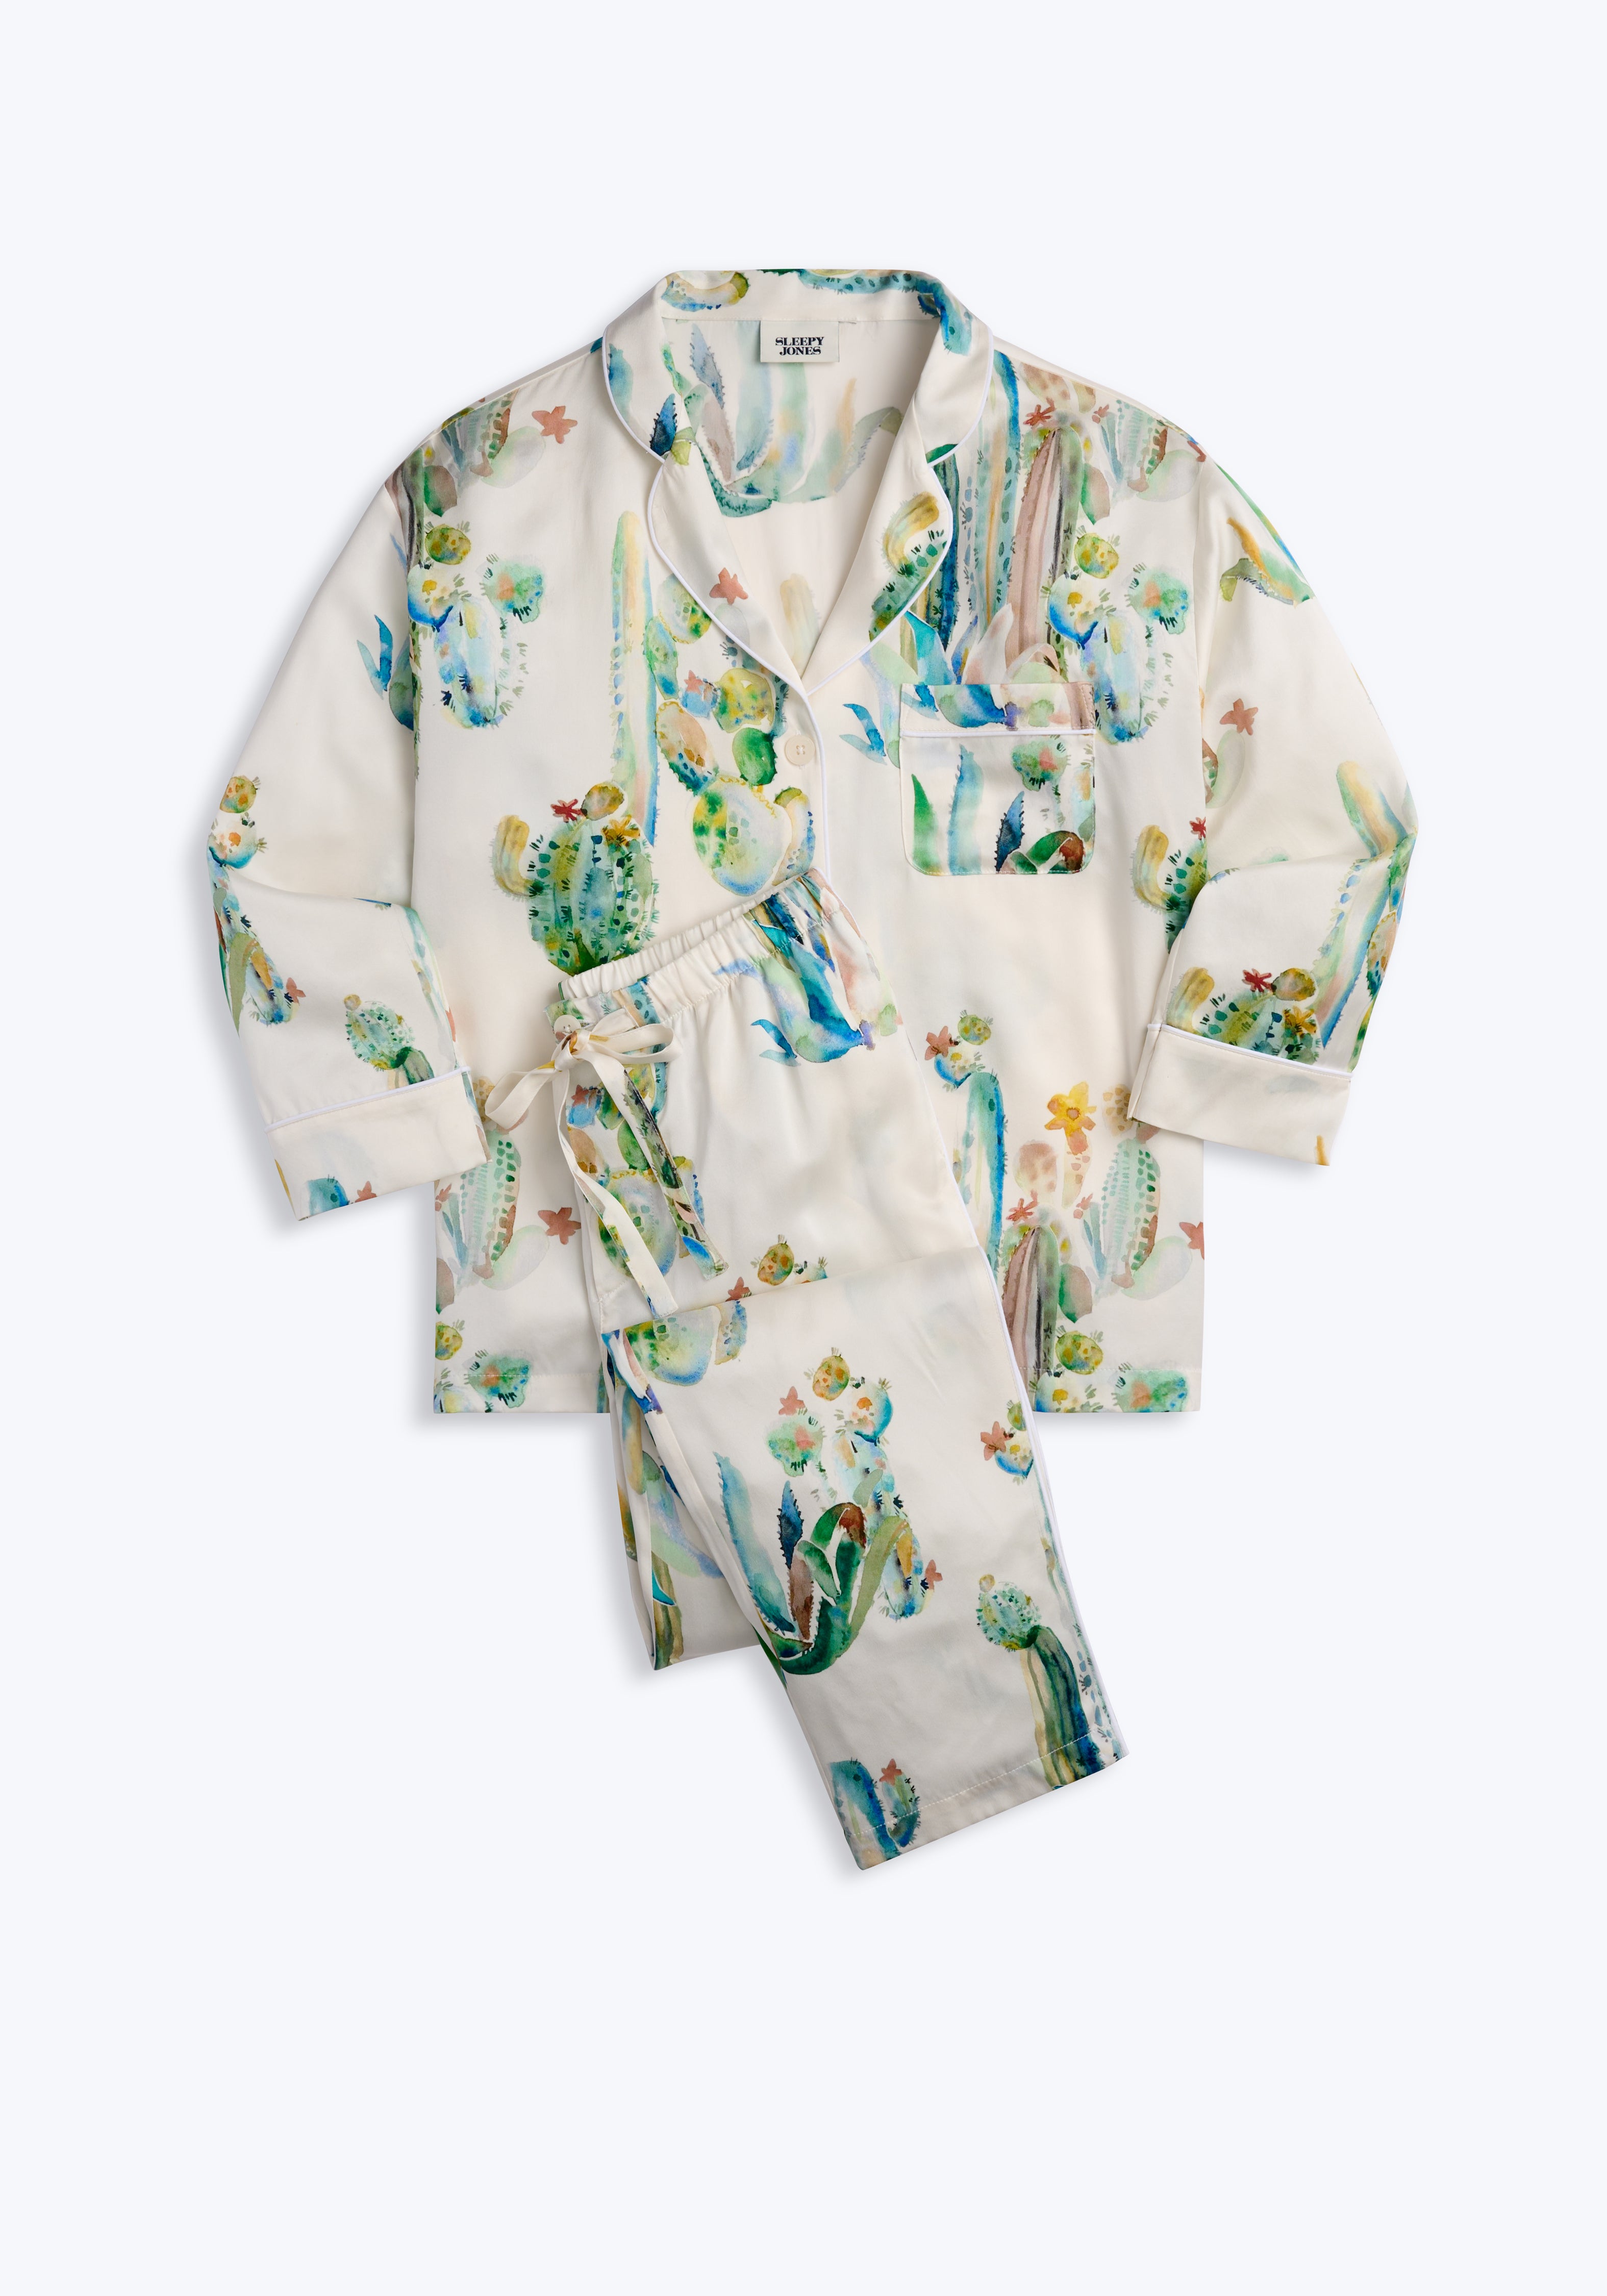 Vintage Jones New York Silky Tropical Floral Pajamas 30s Style